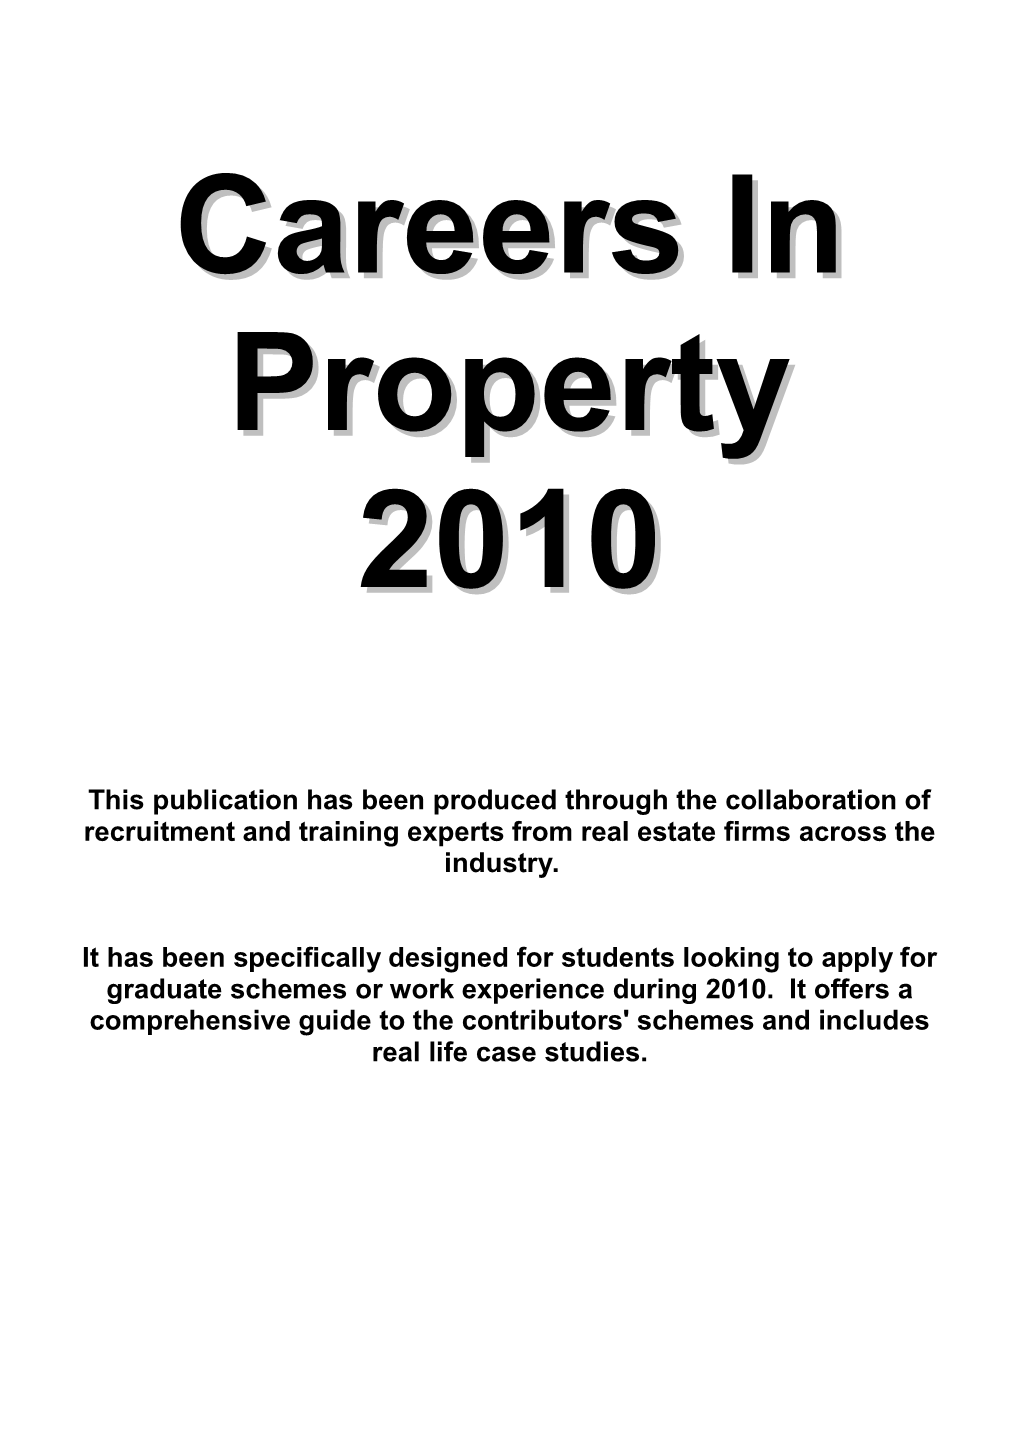 Careers in Property 2010 2 Careers in Property